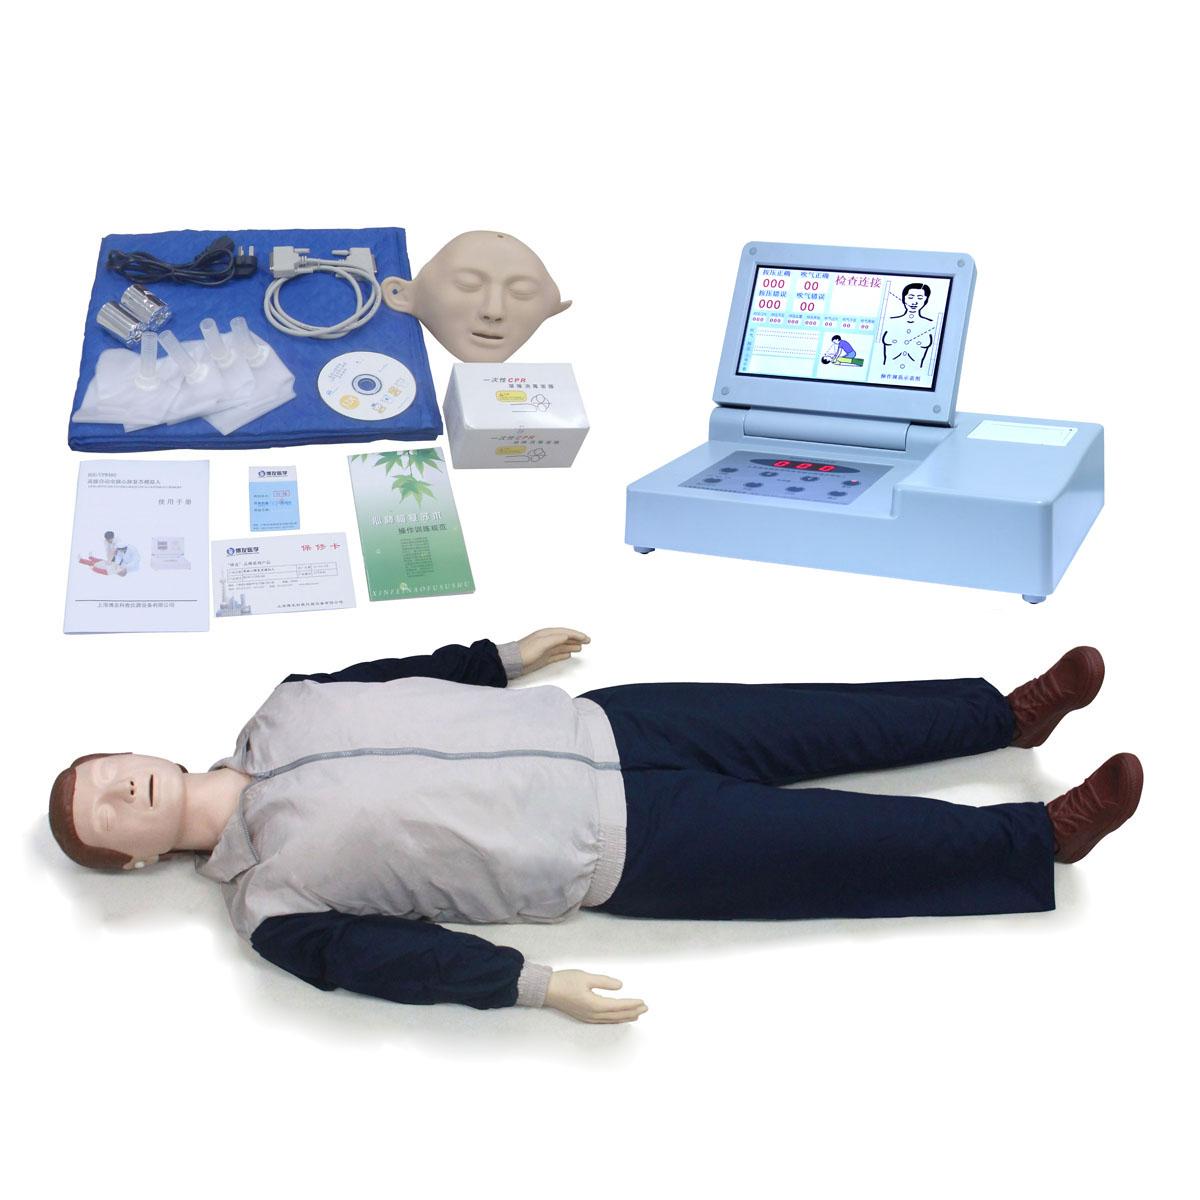 JY/CPR690大屏幕液晶彩显高级电脑心肺复苏模拟人图片